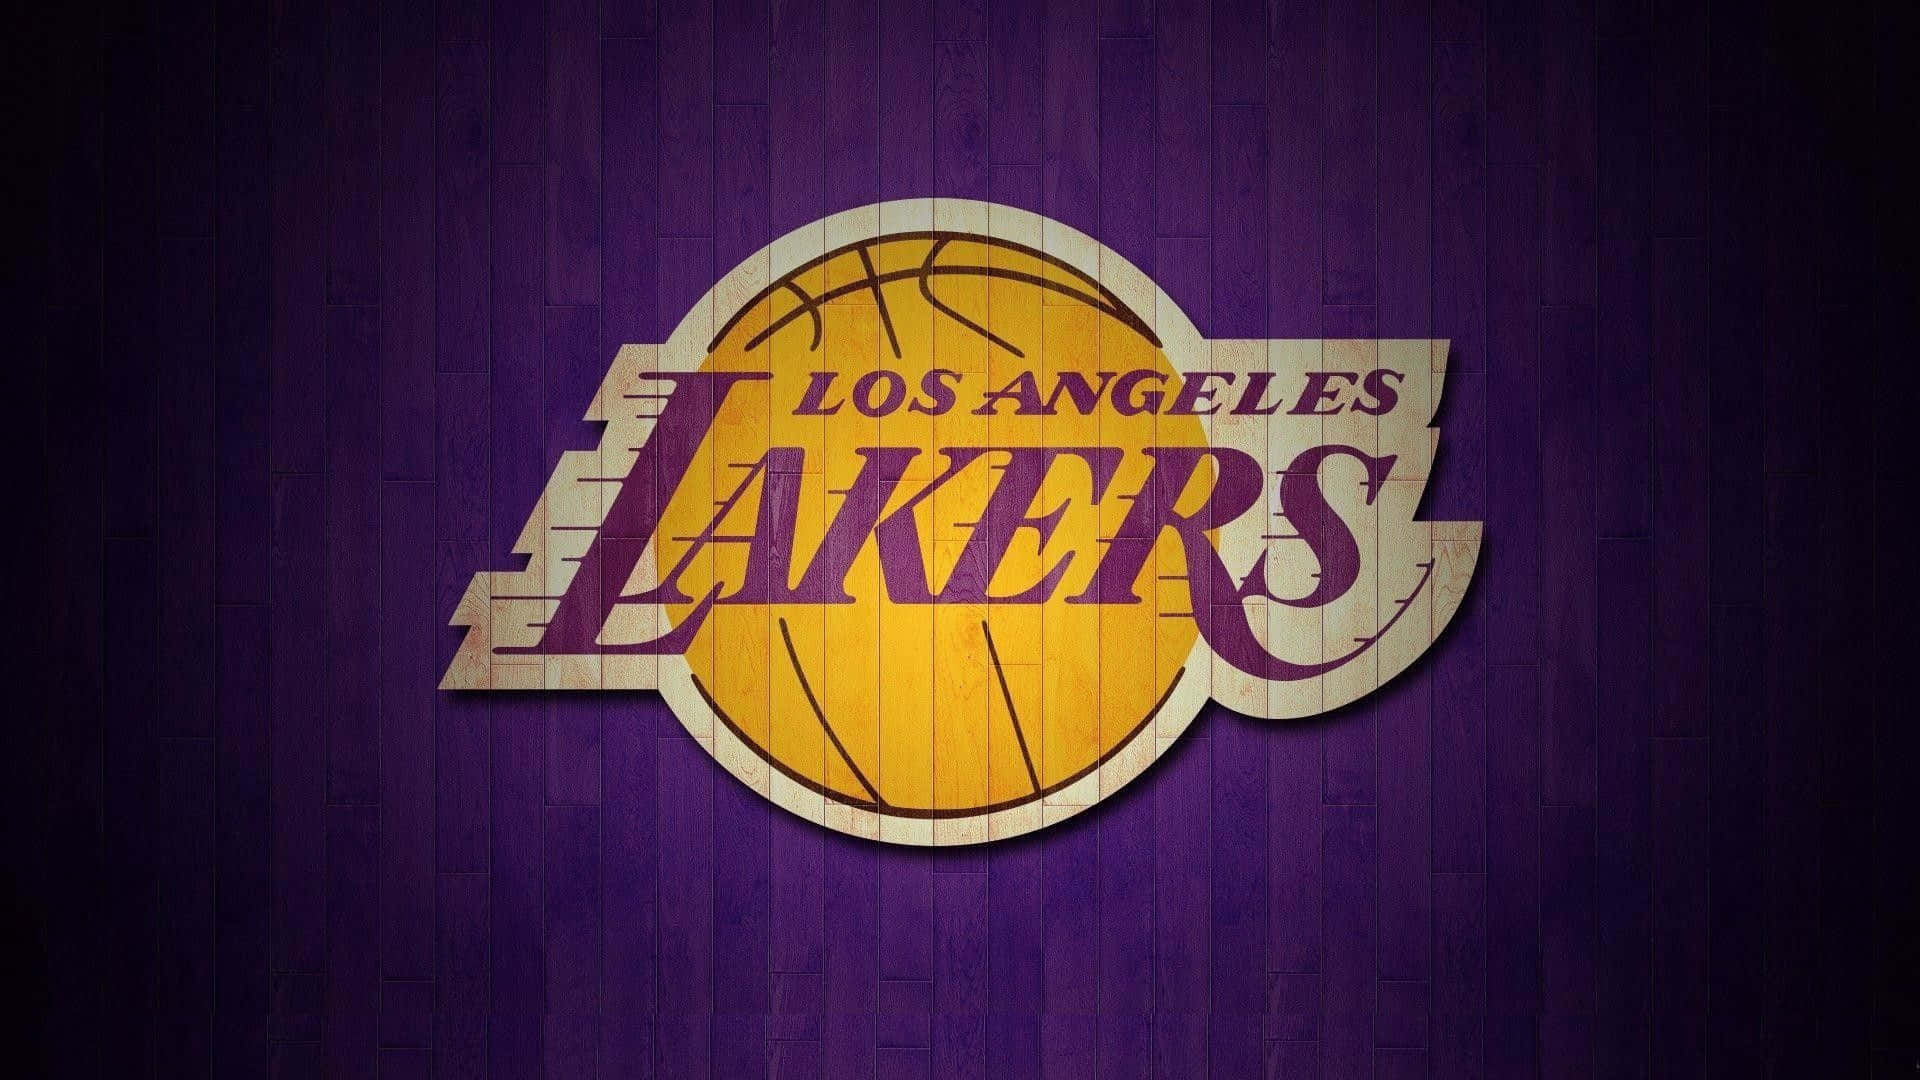 Losangeles Lakers Intar Mittcirkeln.